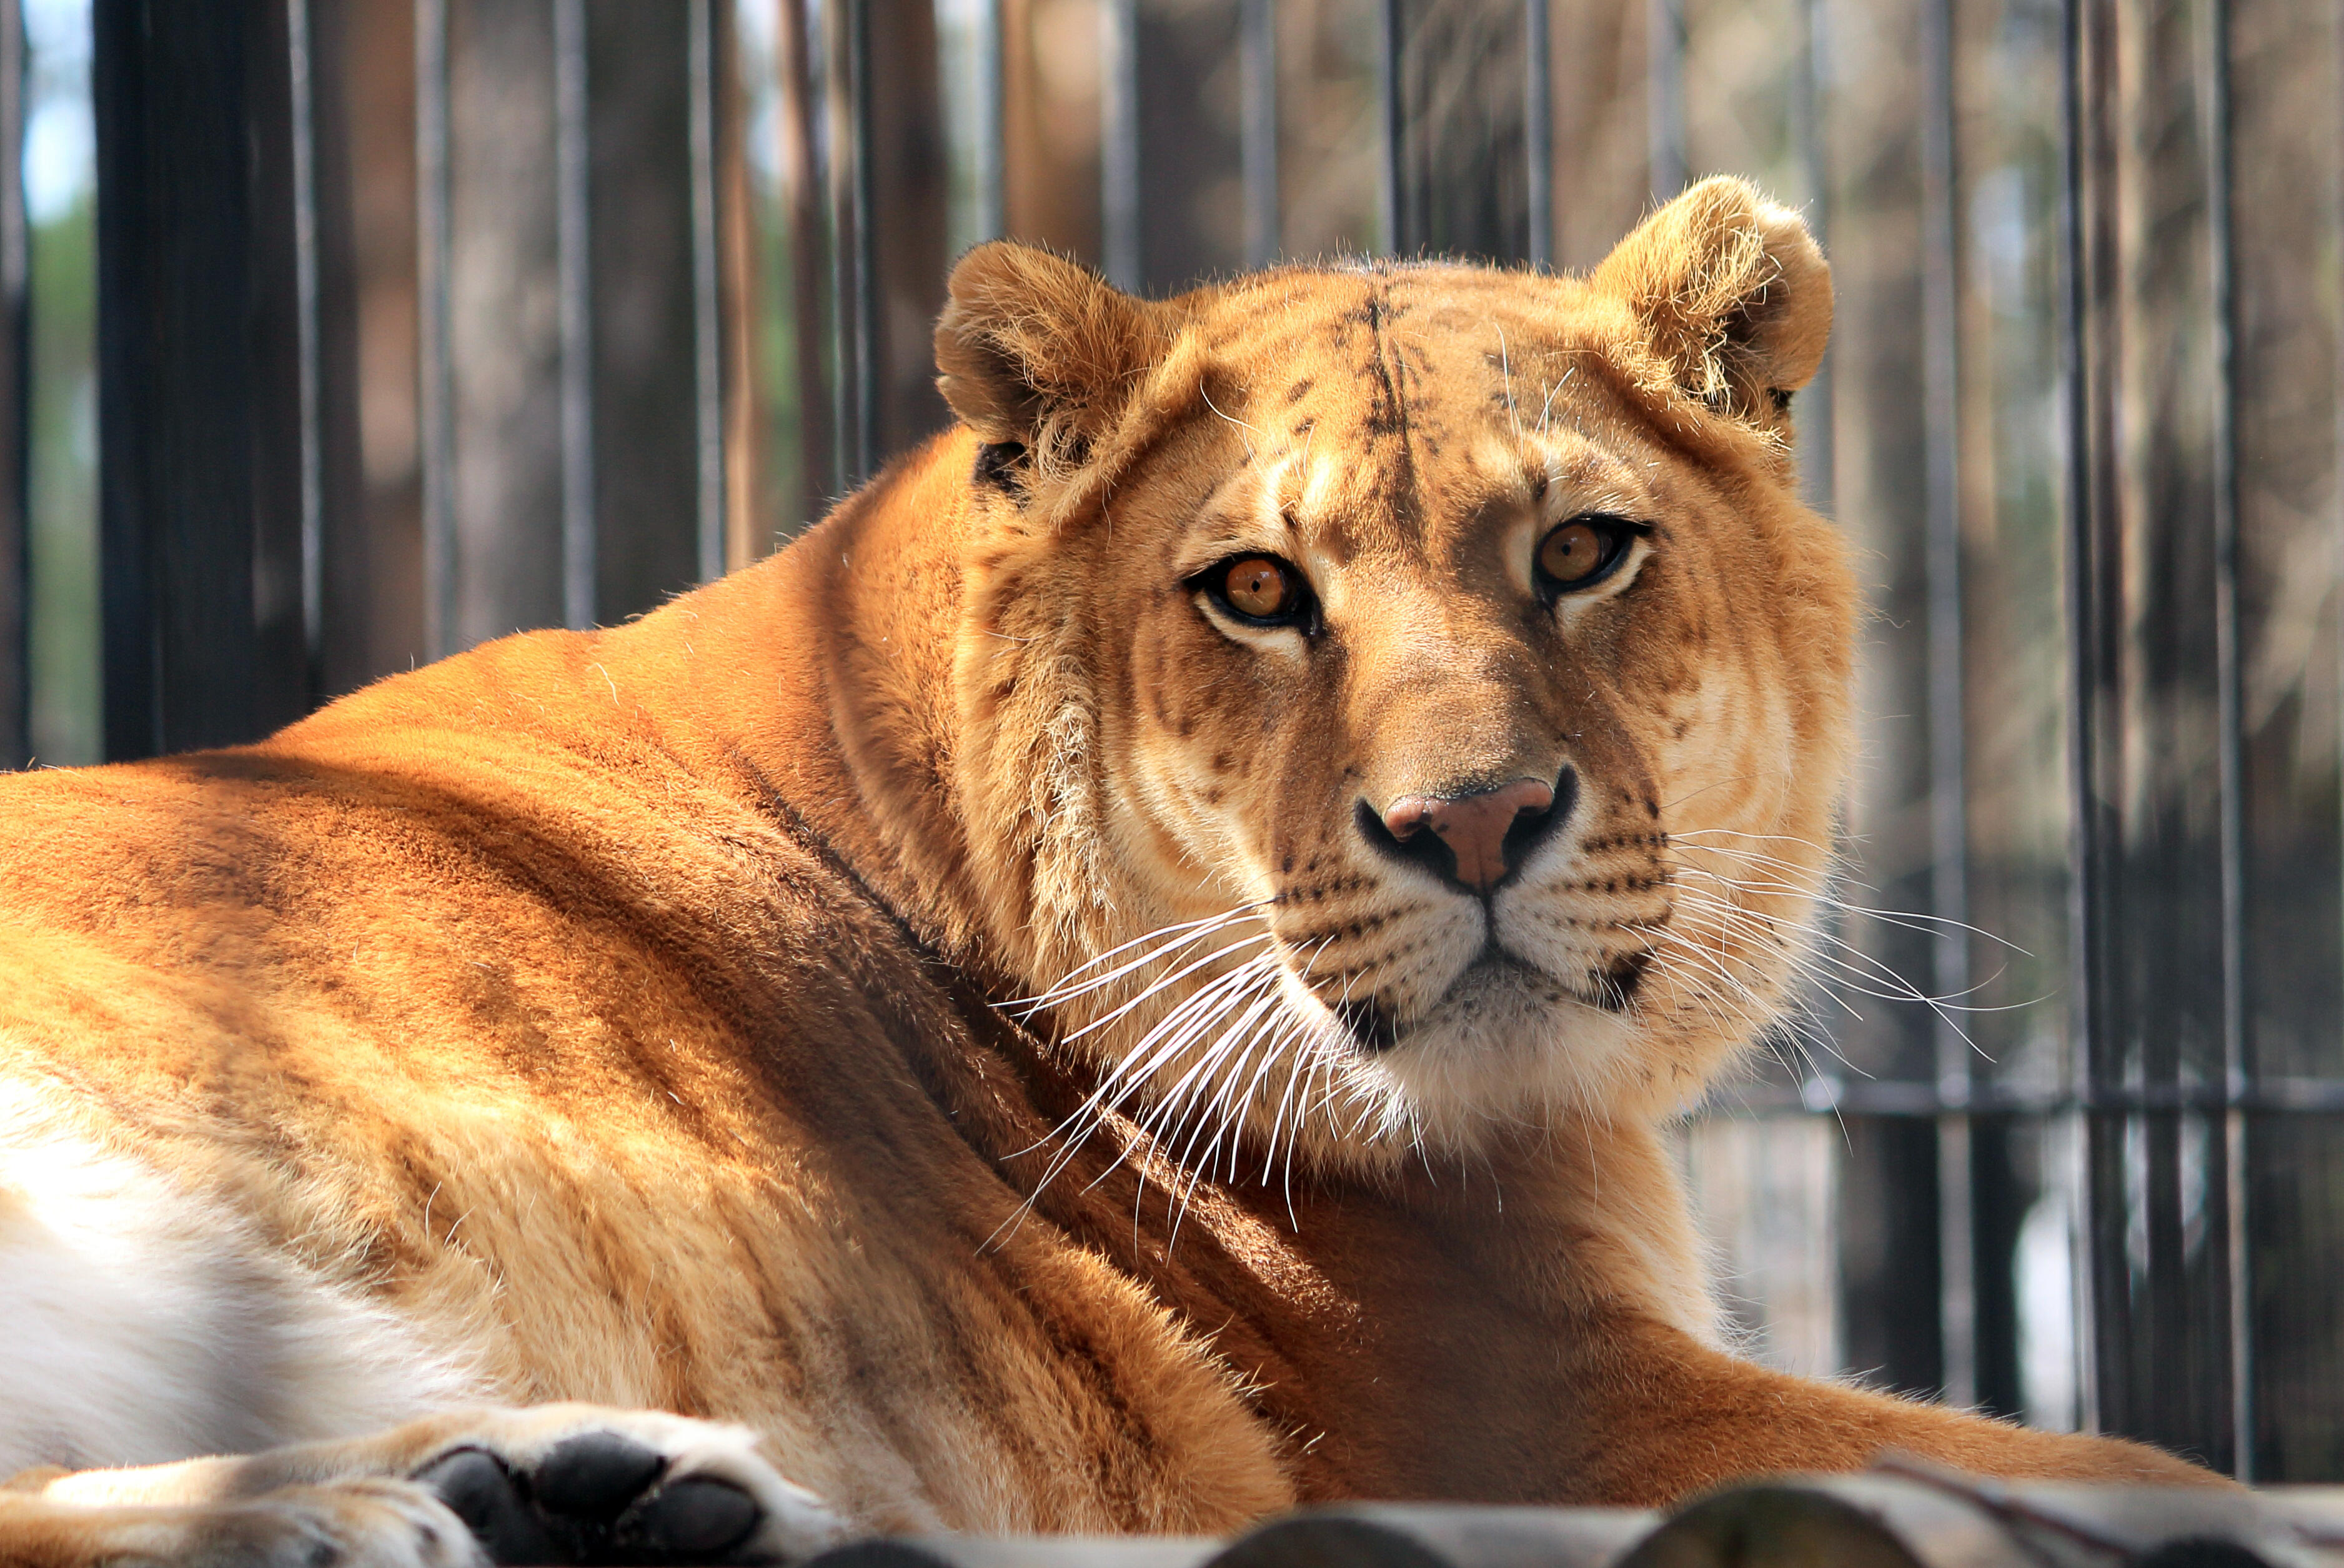 hybrid animals liger